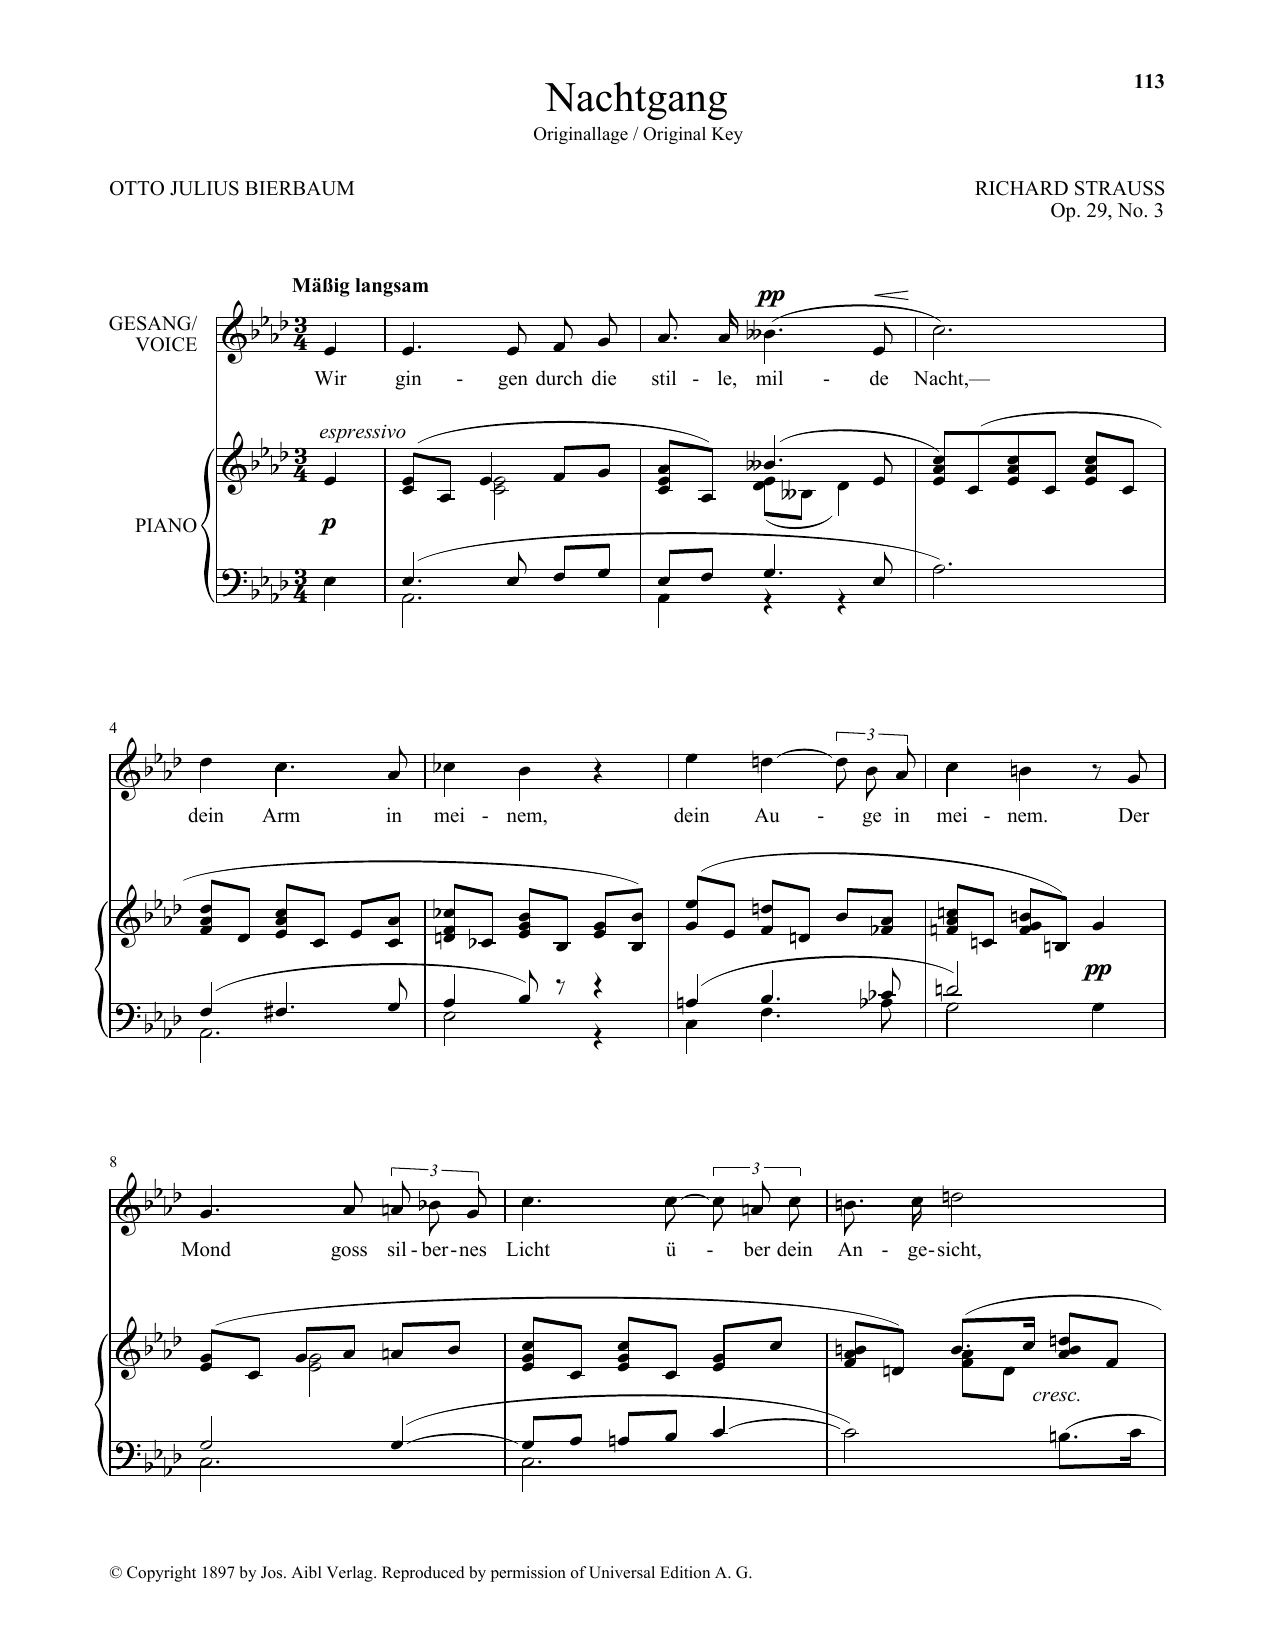 Download Richard Strauss Nachtgang (High Voice) Sheet Music